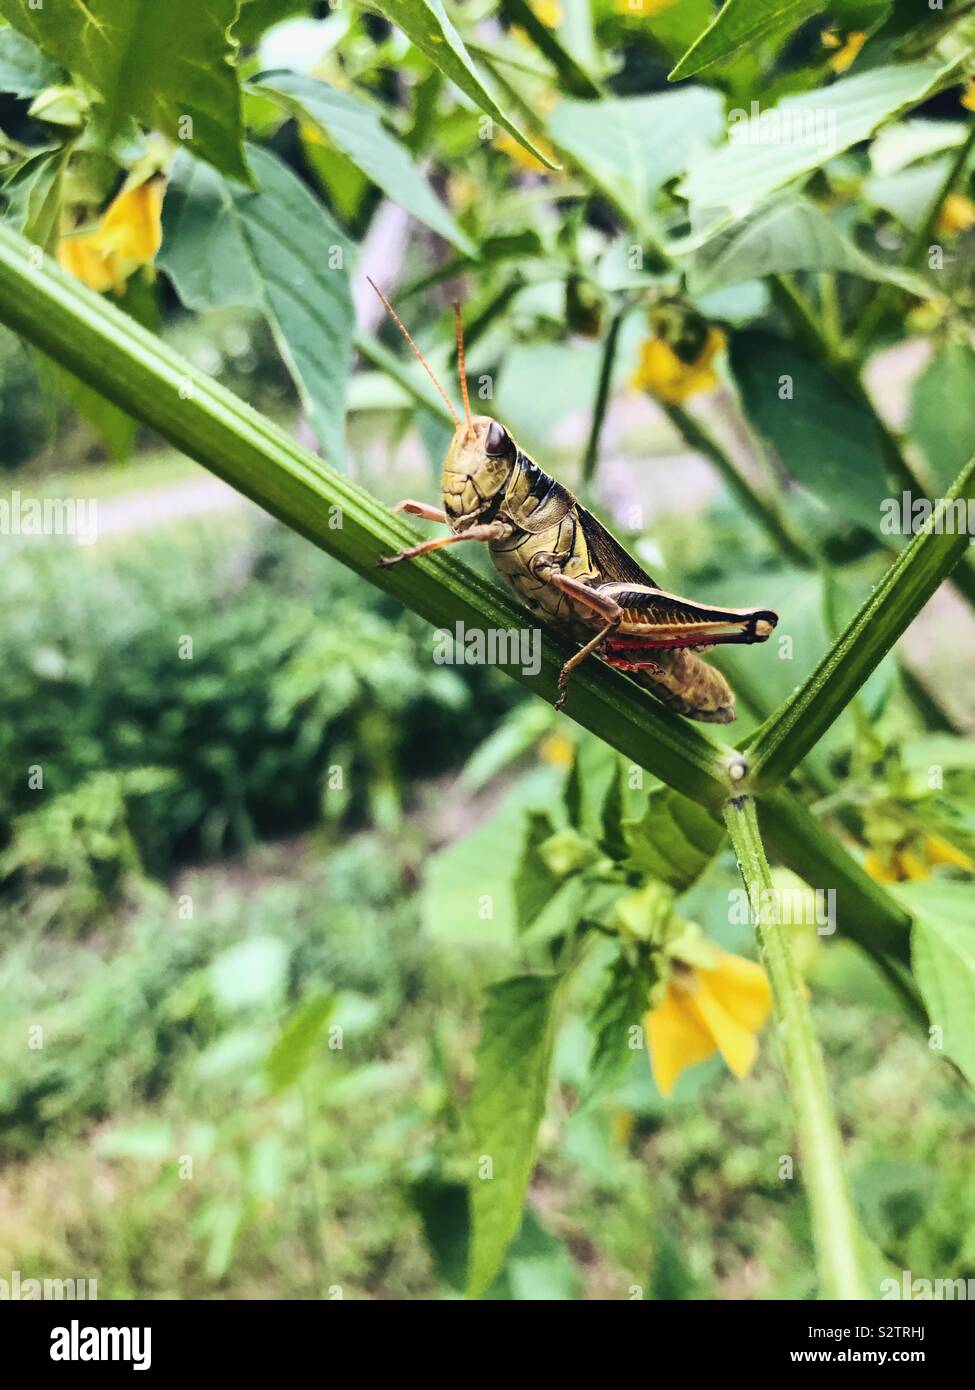 Grasshopper in the garden on a tomatillo plant Stock Photo